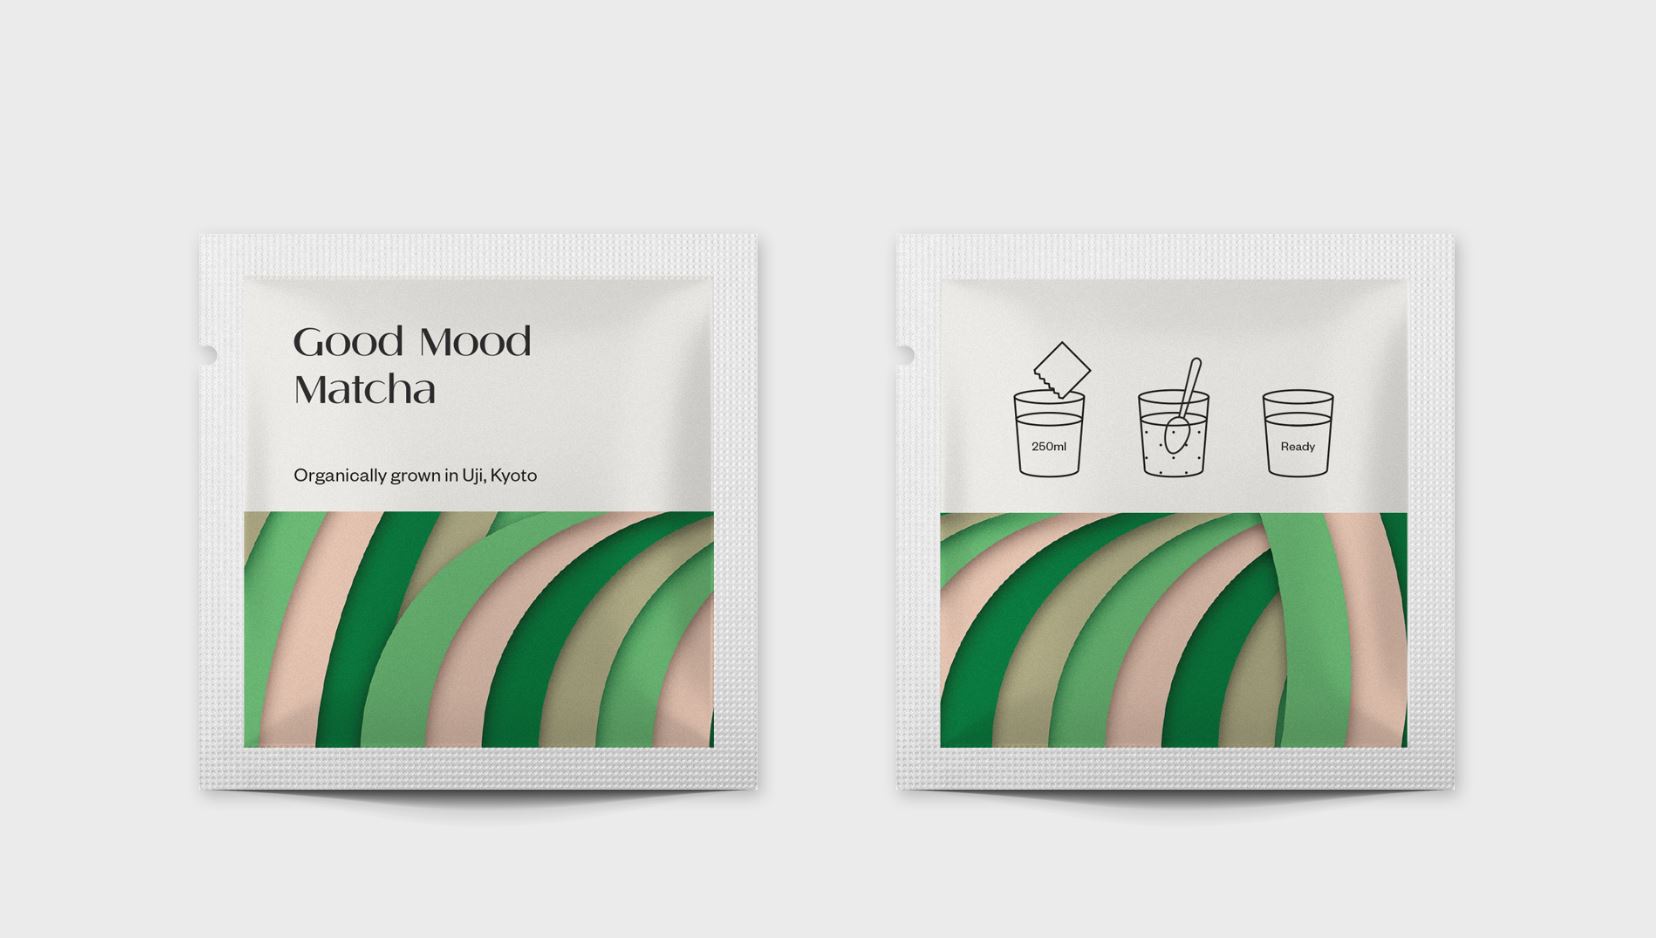 Good Mood Match抹茶品牌形象和包装设计